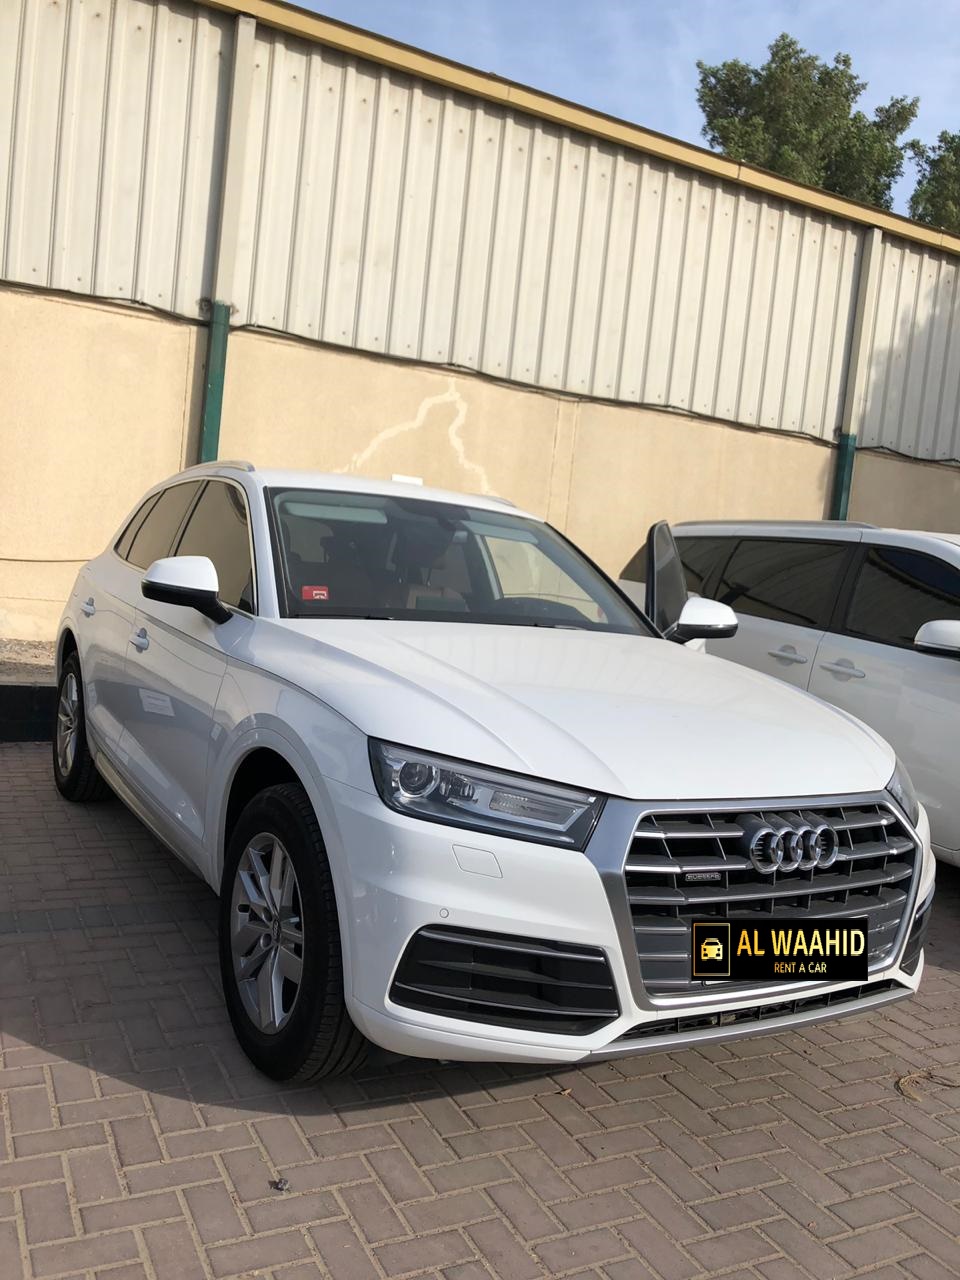 Audi Q5 2018  rental dubai  alwaahid rental dubai